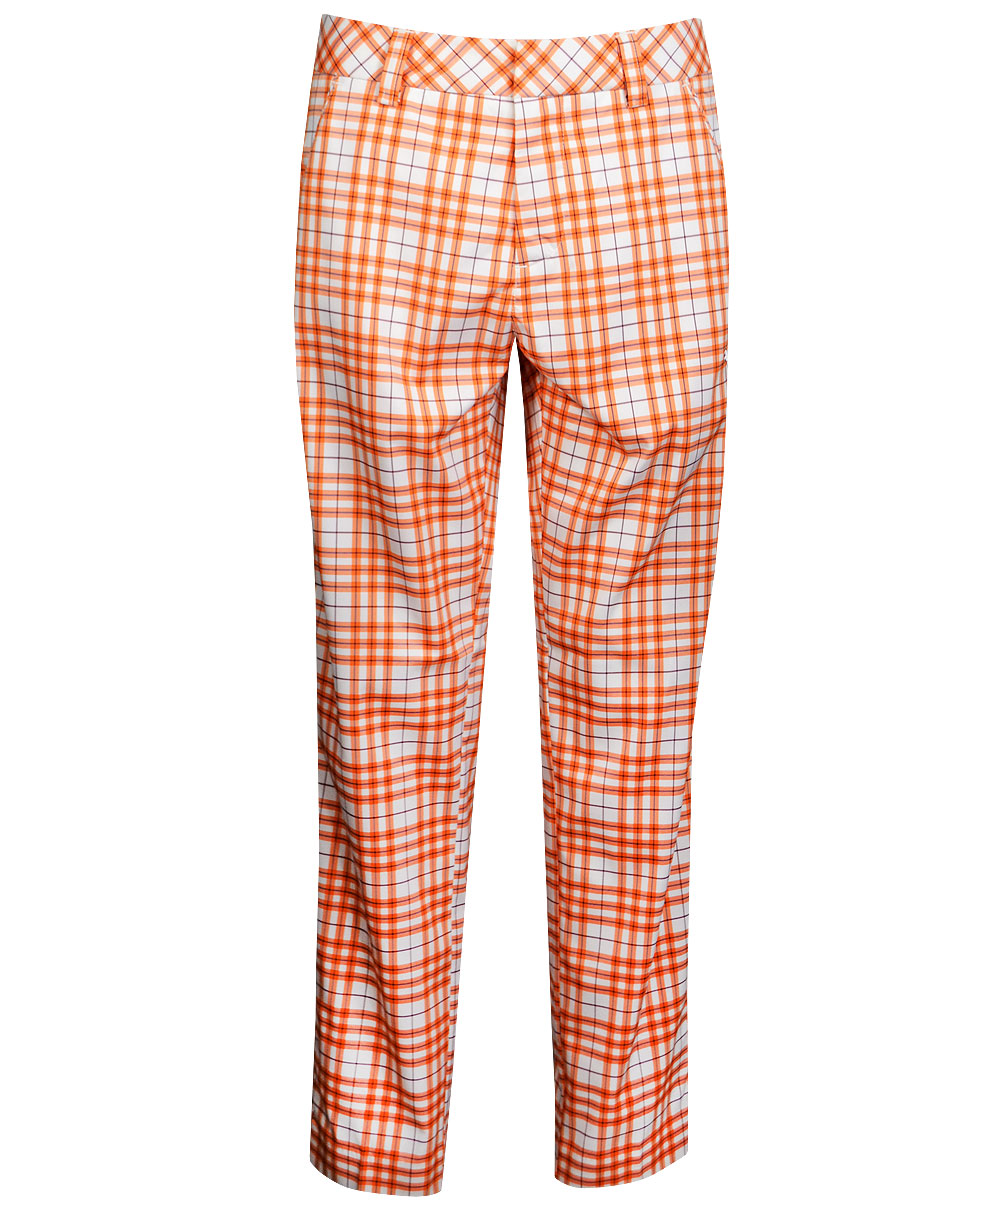 puma golf pants orange